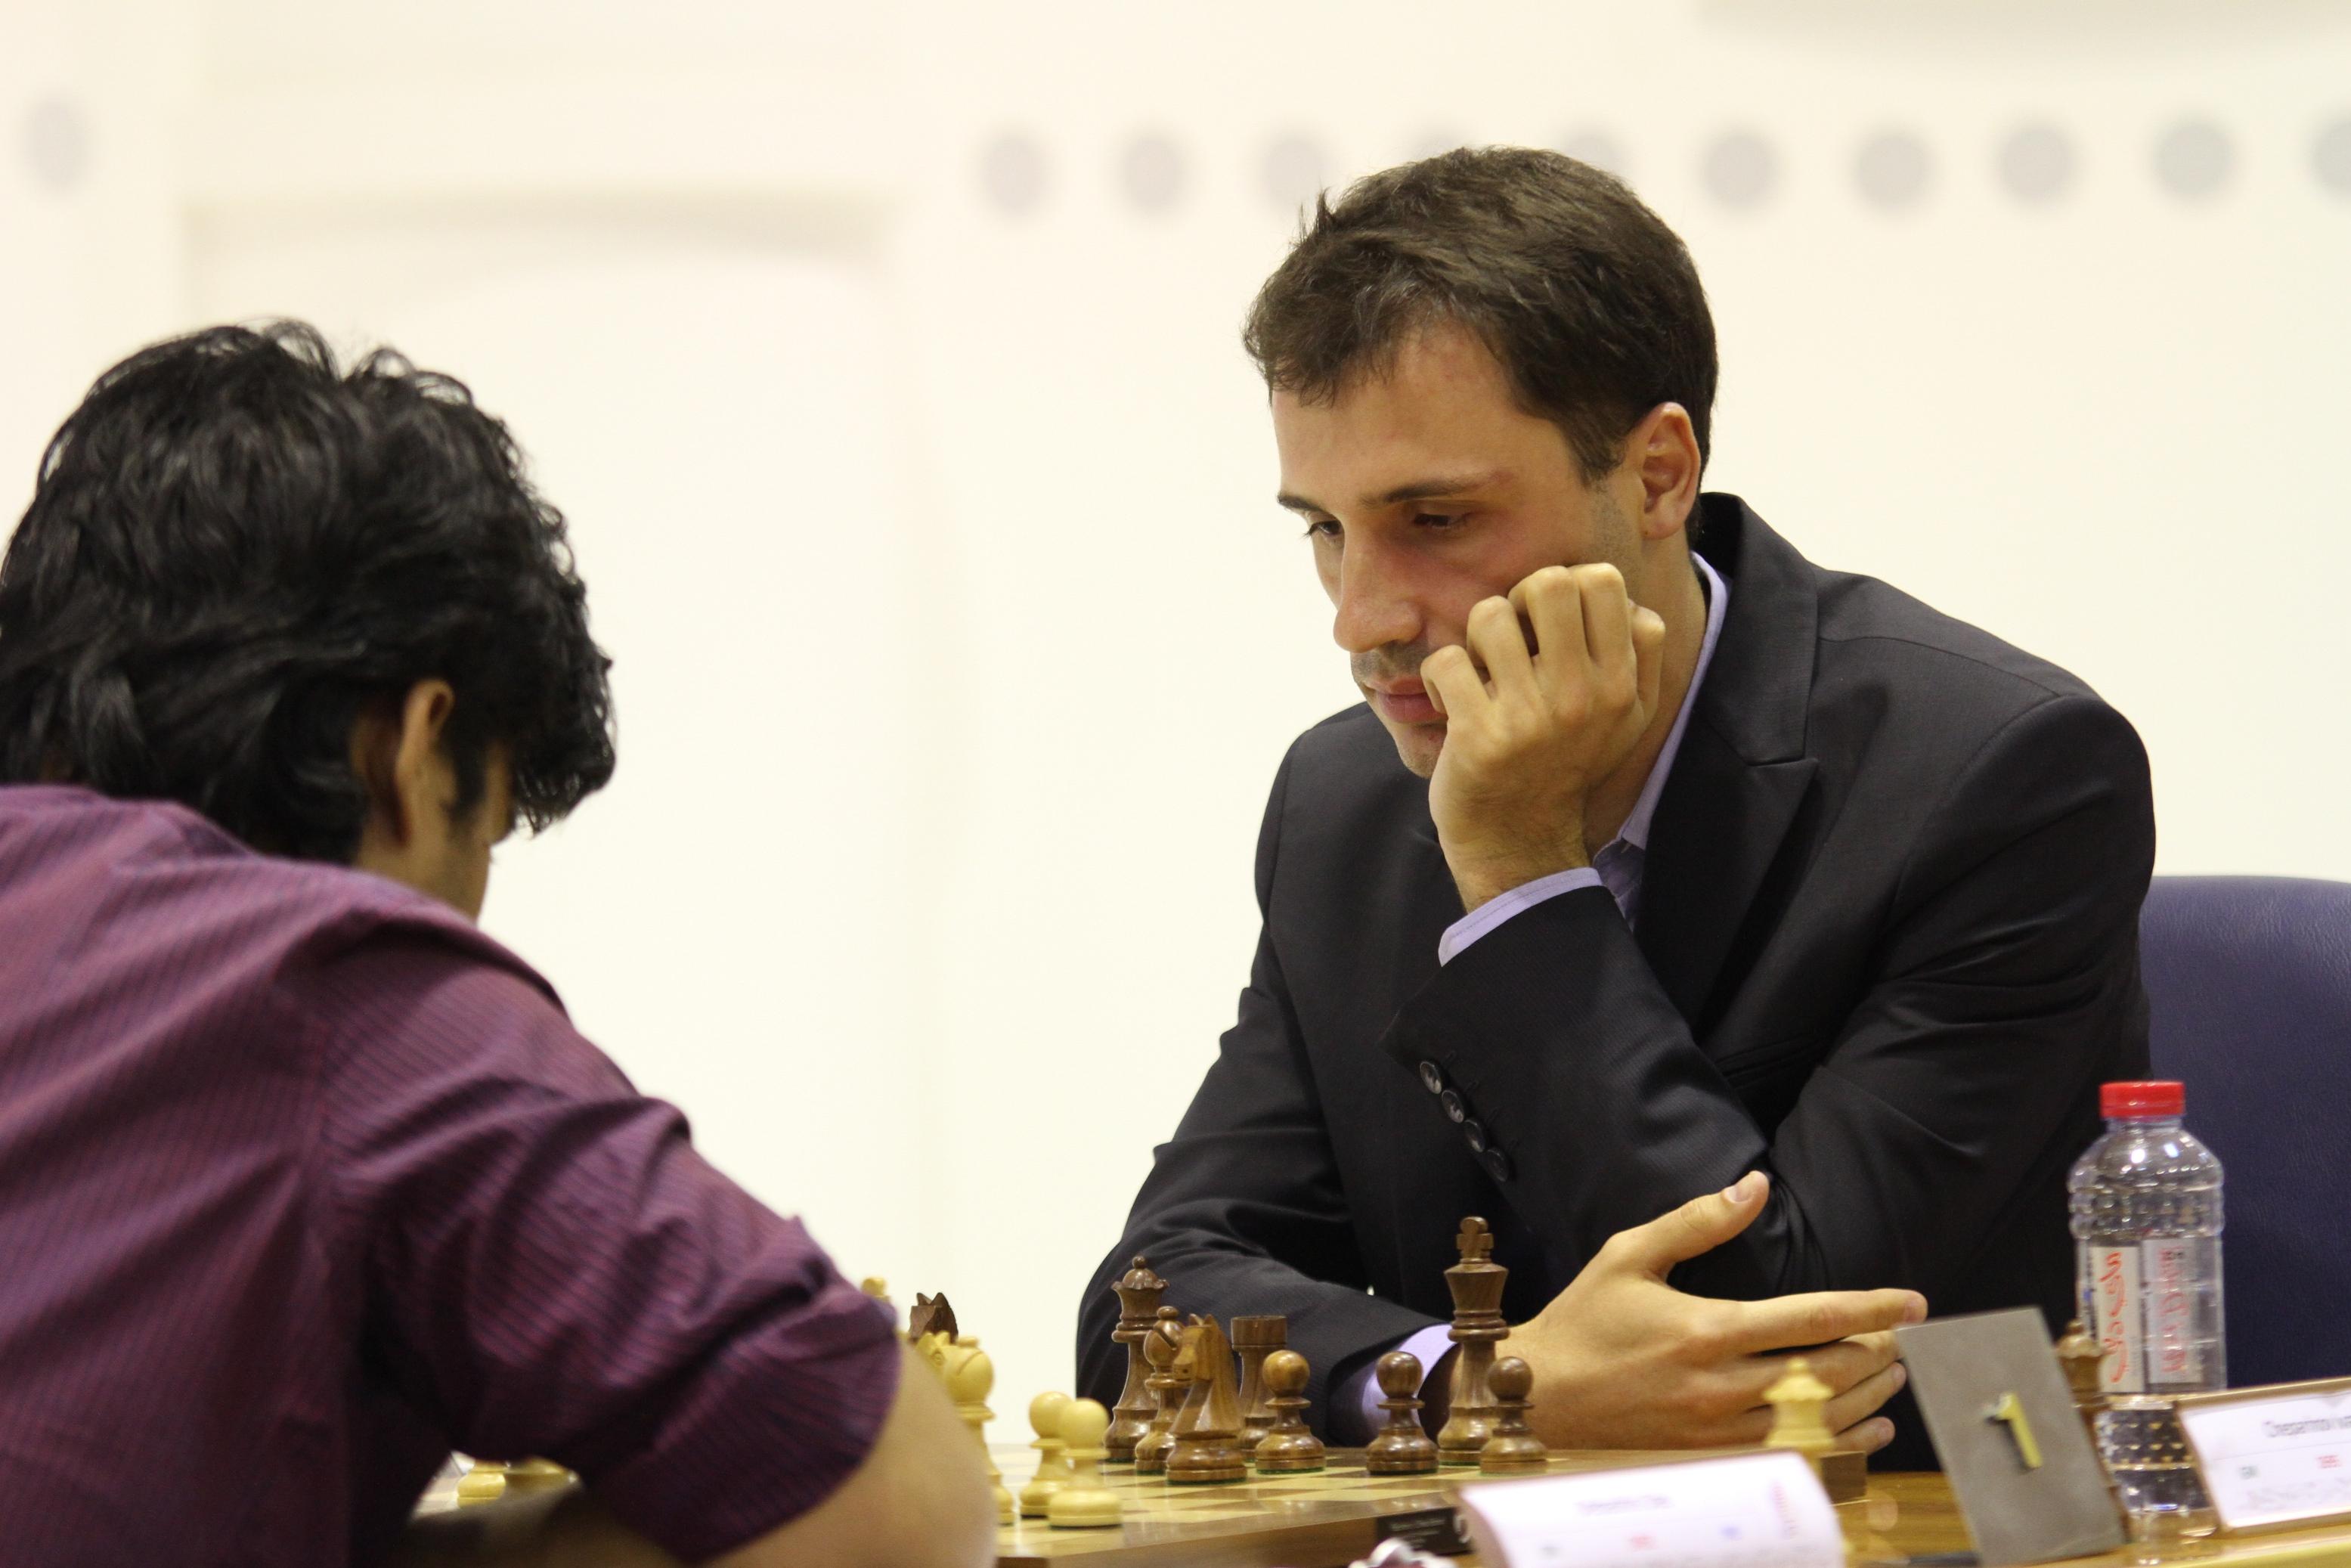 Press Conference  Bulgarian GM Ivan Cheparinov lead grandmasters at Dubai  Open 2016 – Dubai Chess & Culture Club